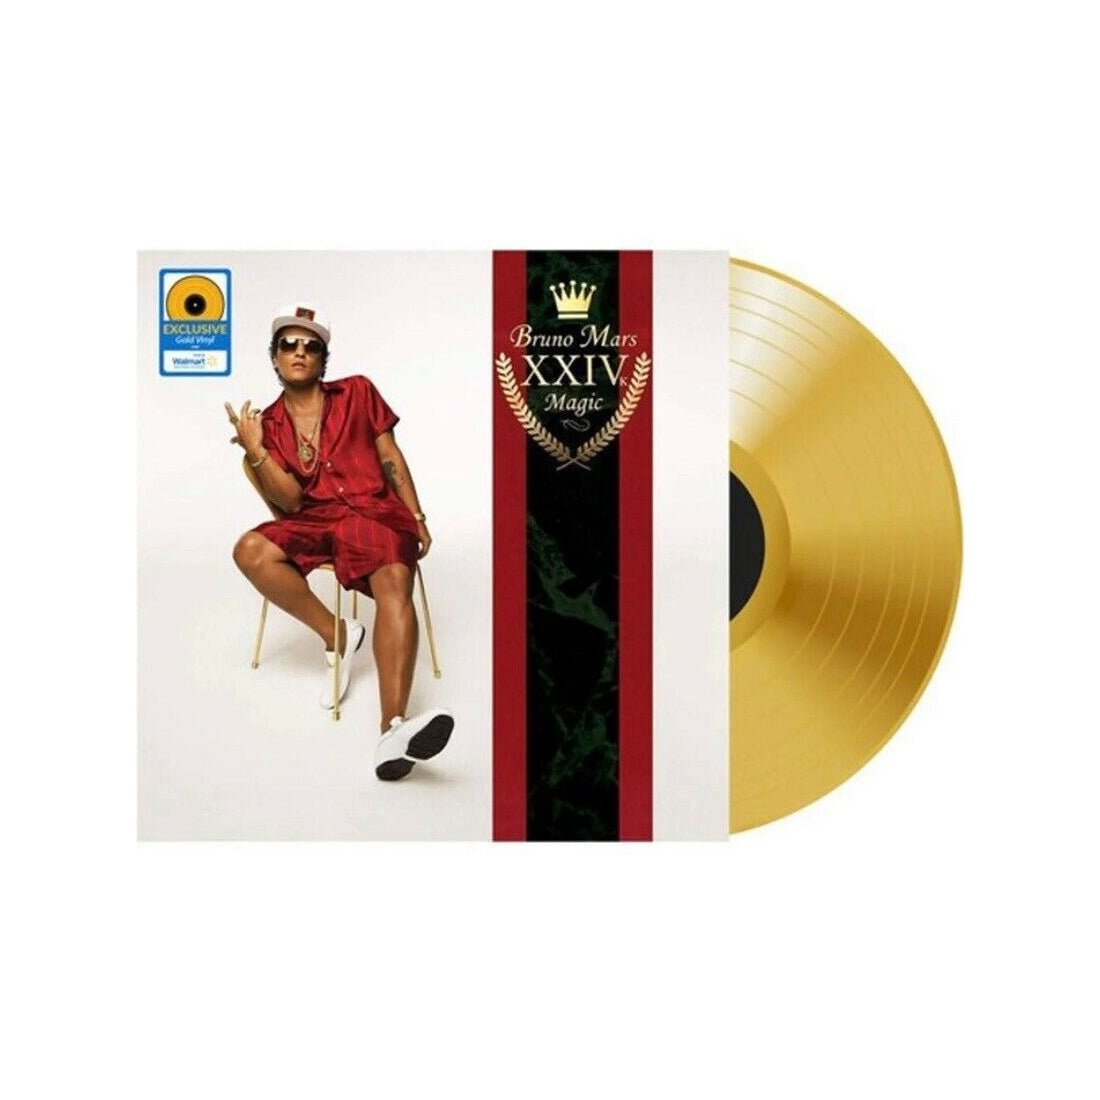 Bruno Mars - XXIVK Magic Vinyl